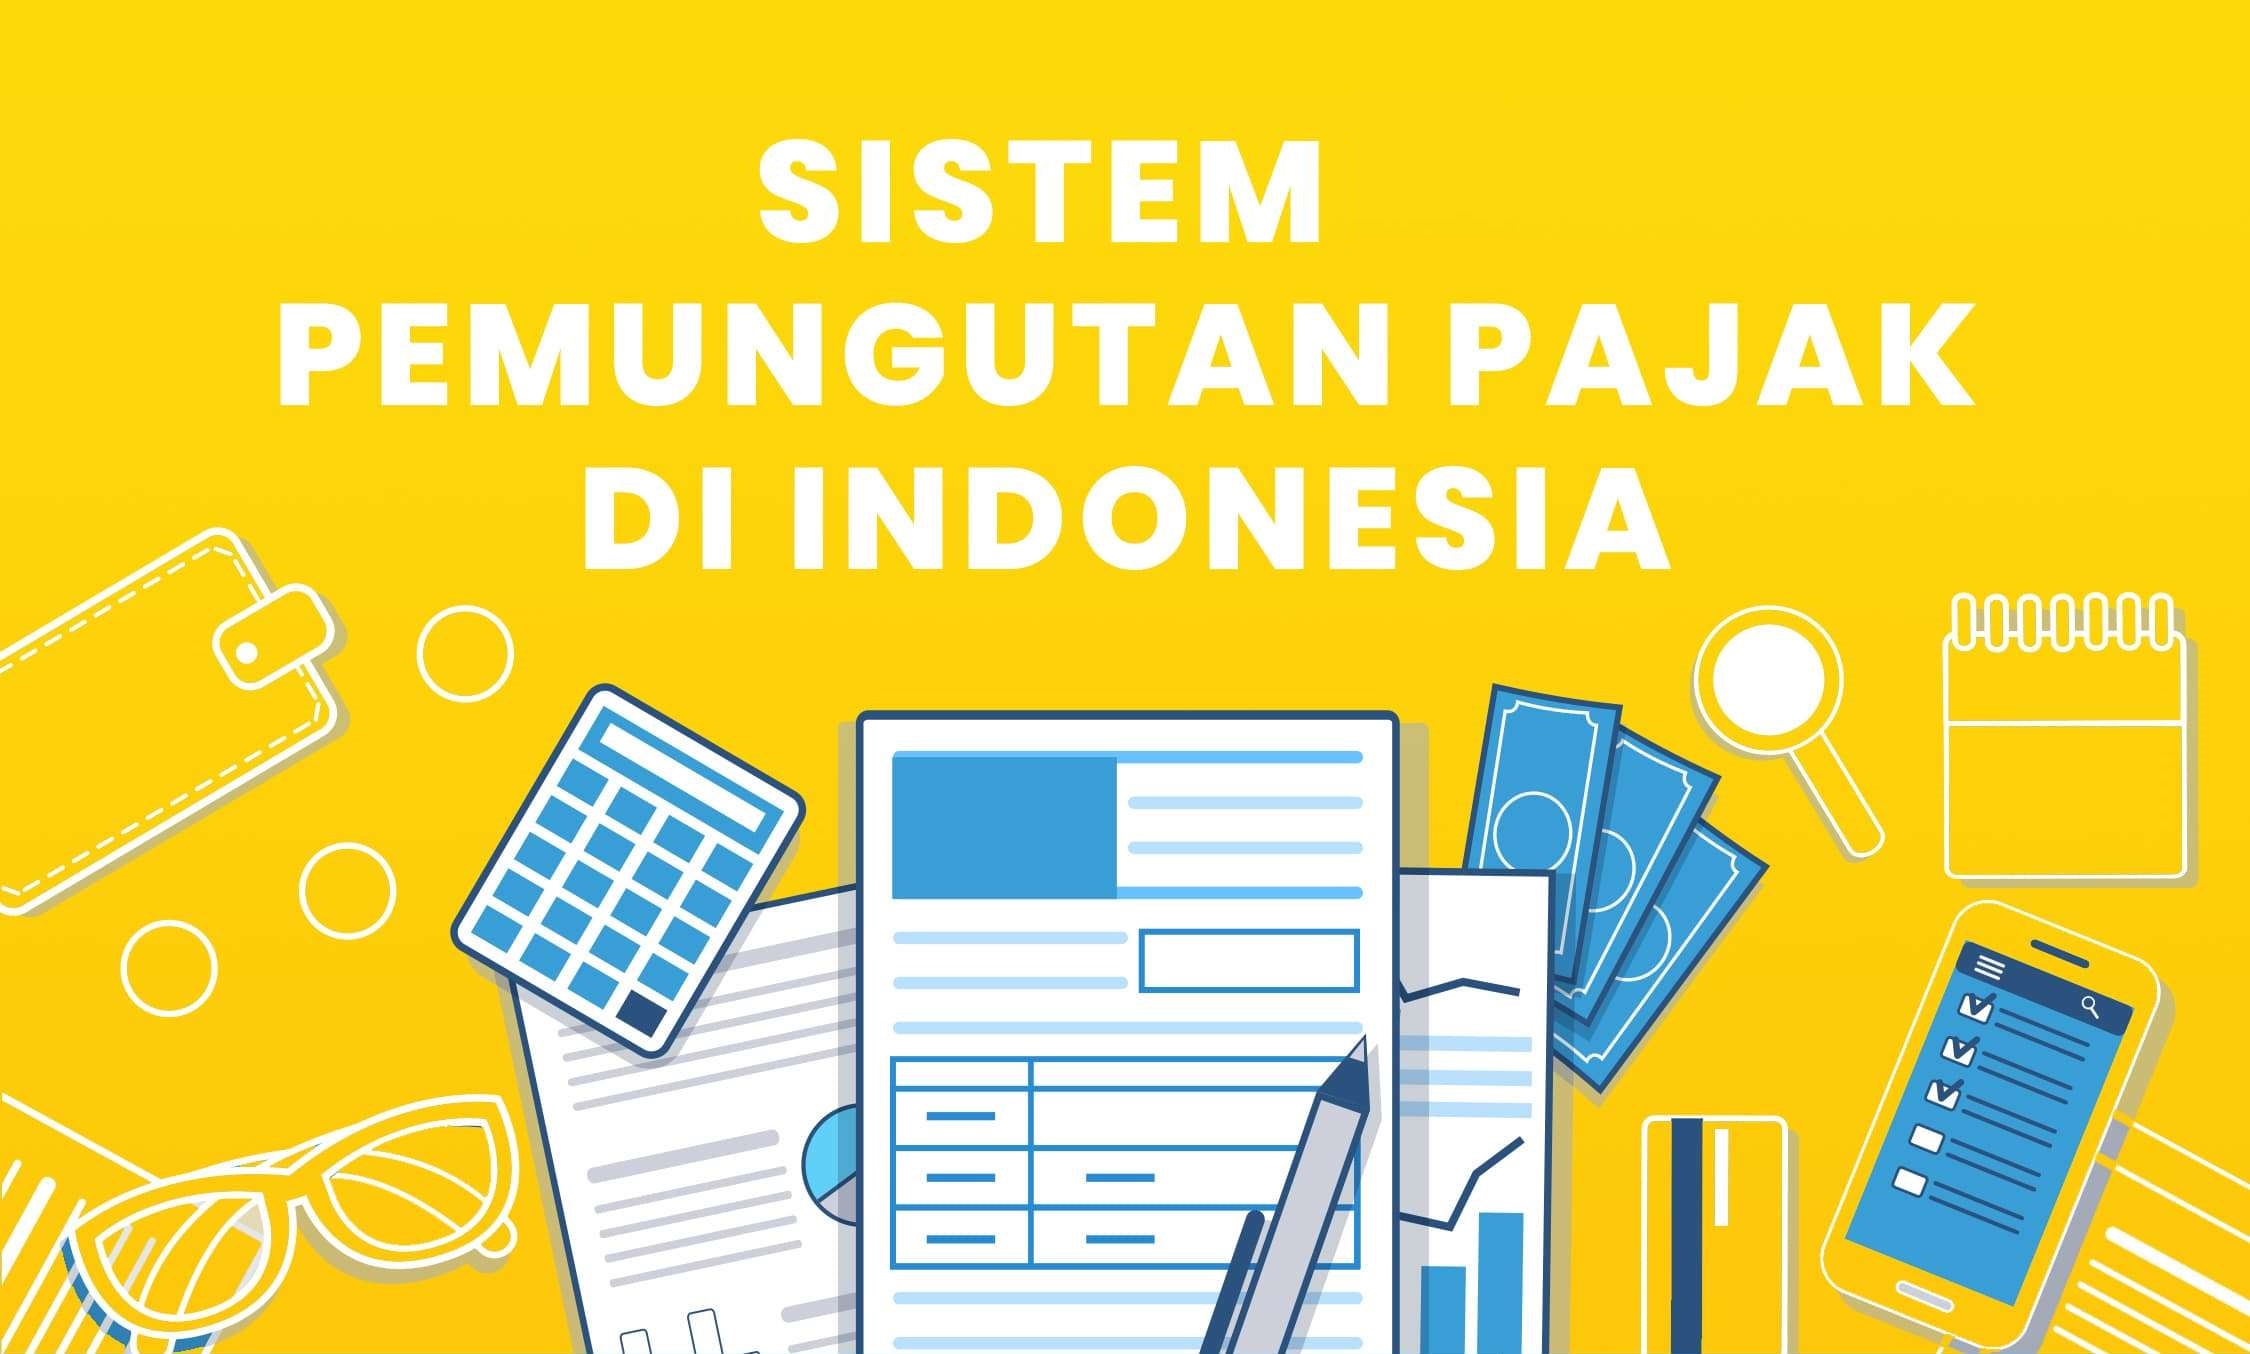 Bagaimana Sistem dalam Pemungutan Pajak di Indonesia?